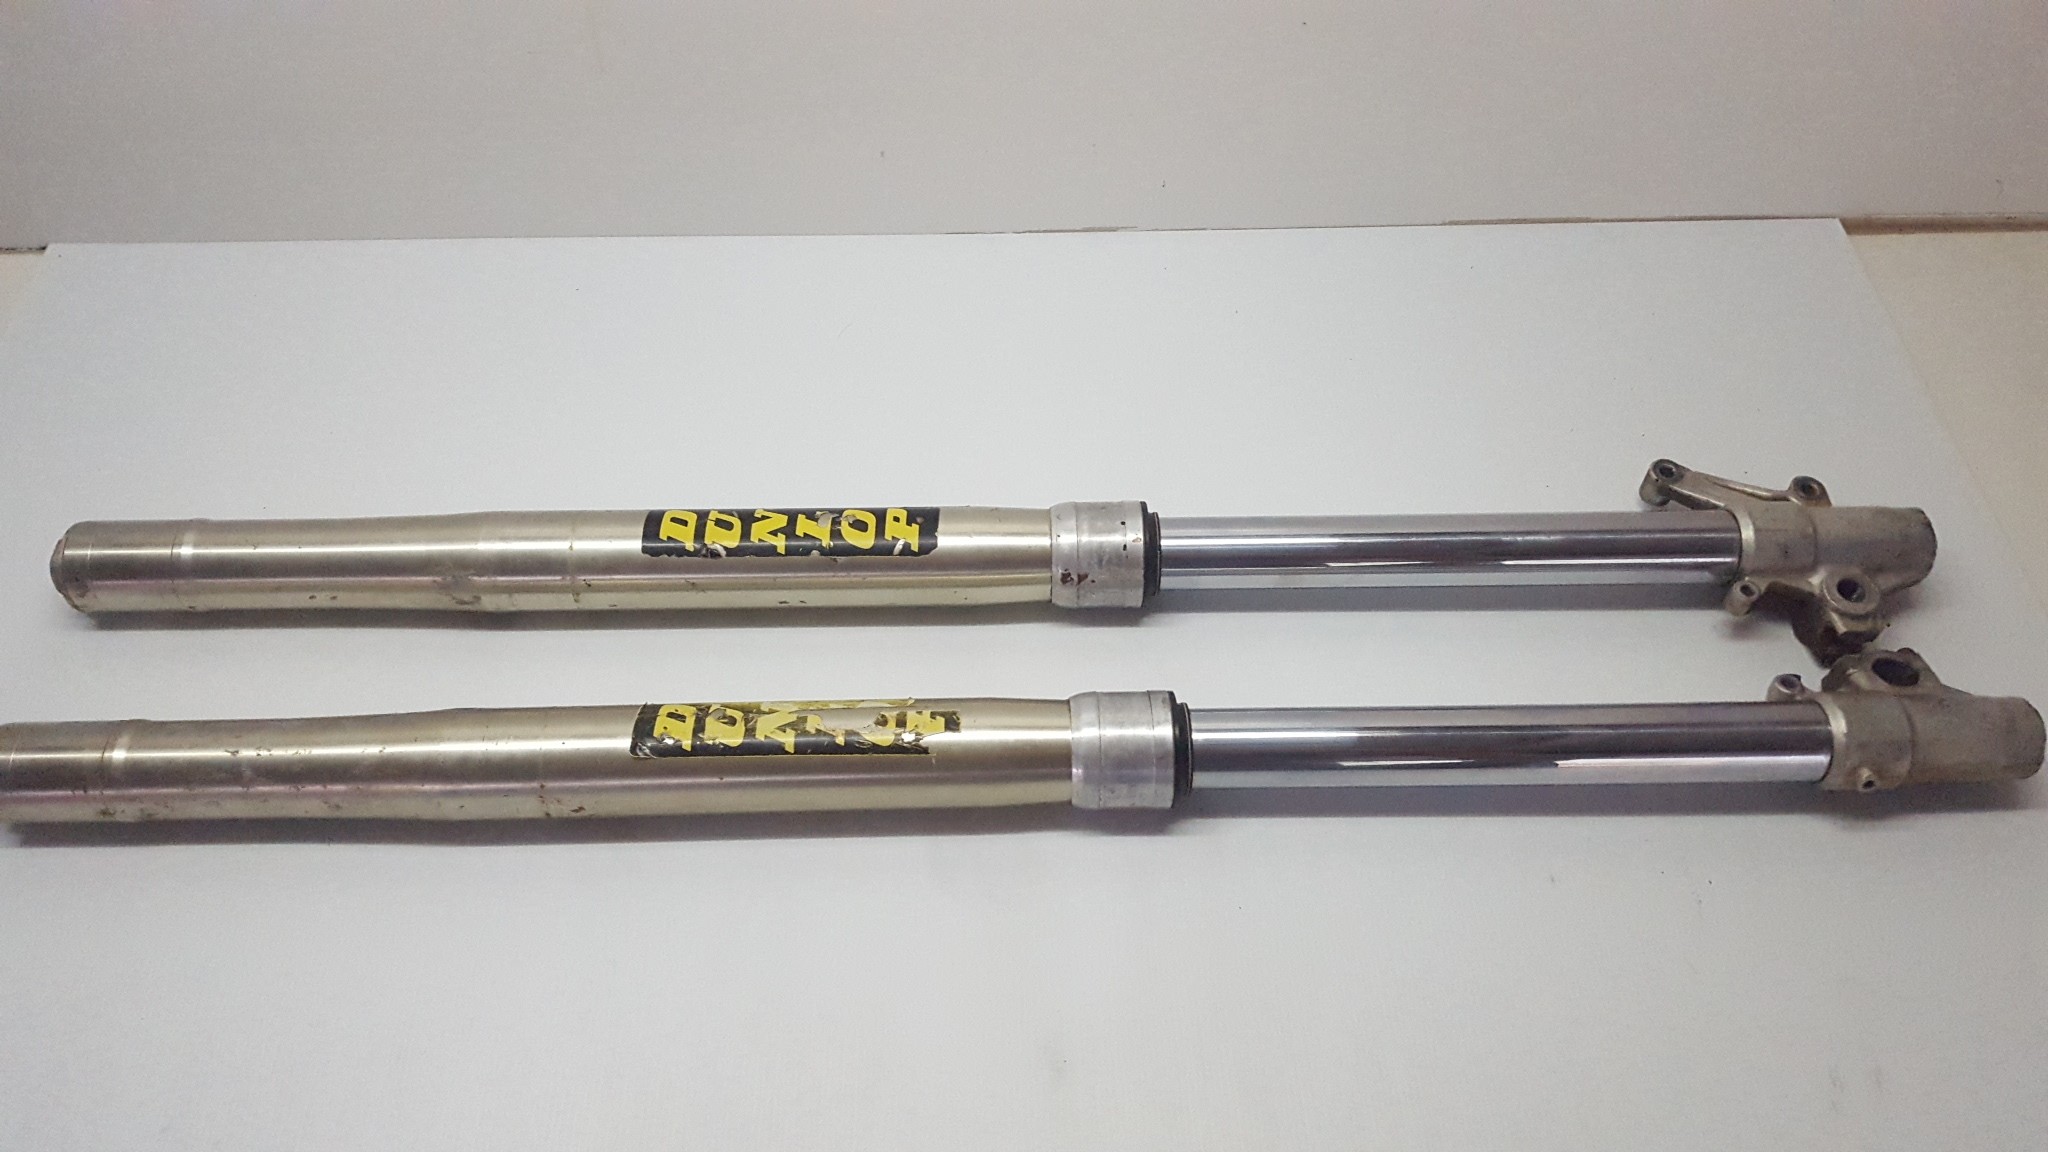 Front Forks Pair Suzuki RM125 1990 RM 125 89-91 #766